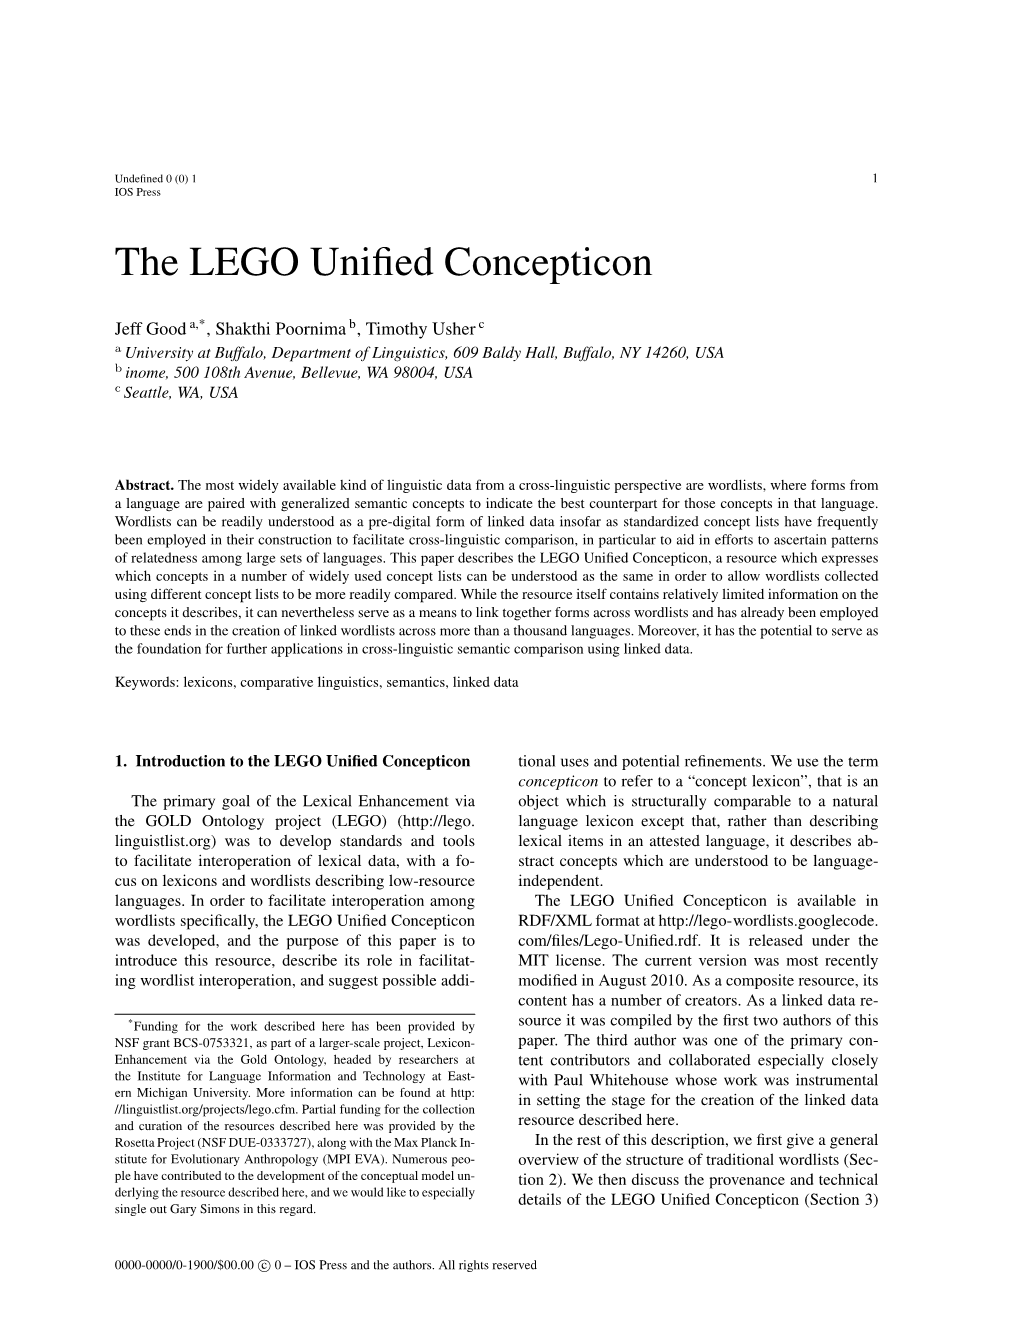 The LEGO Unified Concepticon